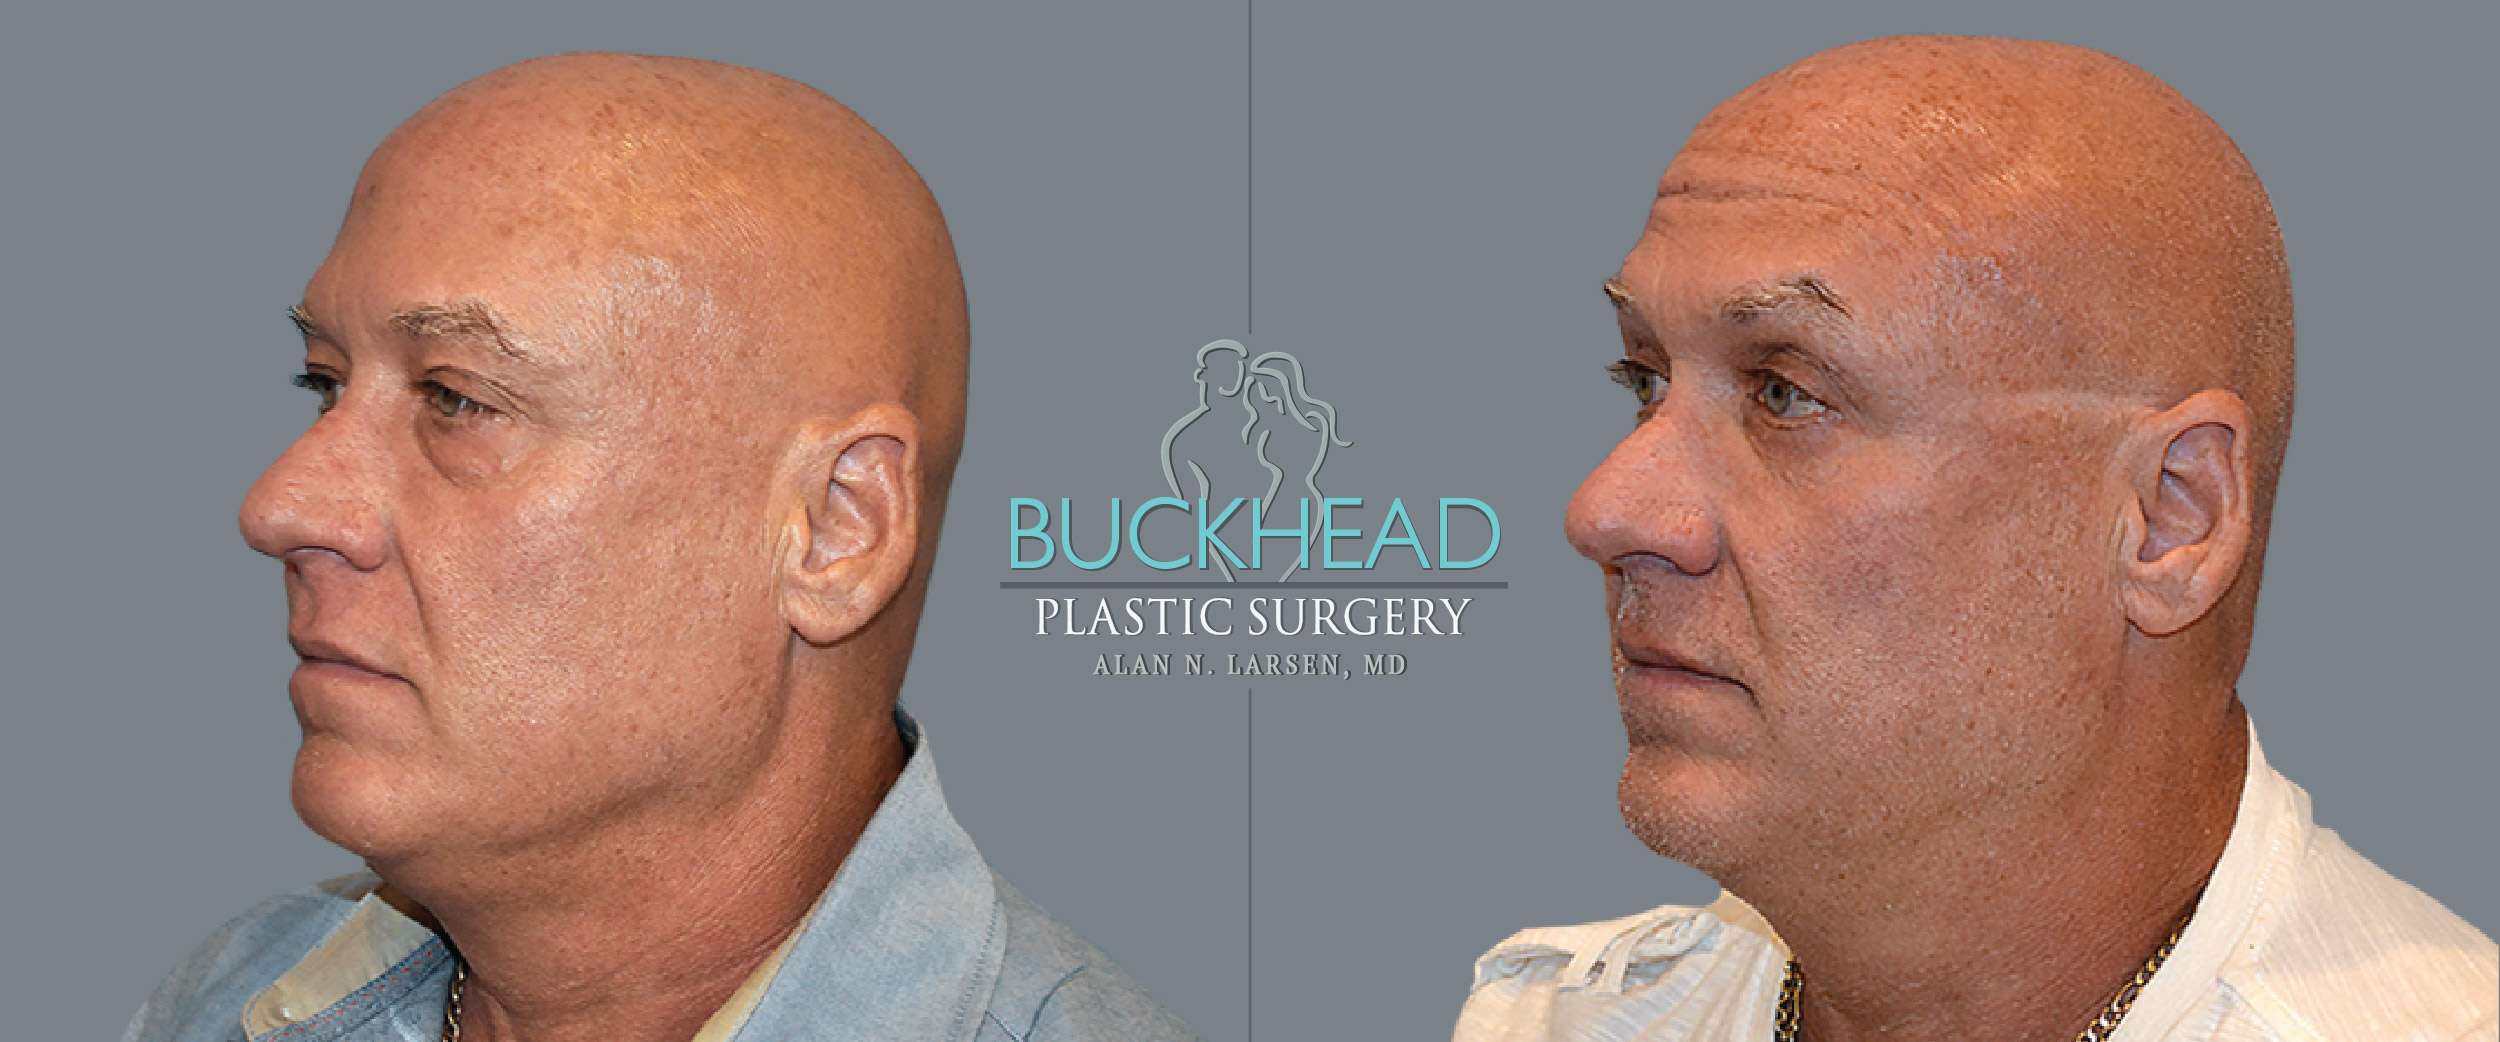 Before and After Photo Gallery | Blepharosty | Buckhead Plastic Surgery | Alan N. Larsen, MD | Board-Certified Plastic Surgeon | Atlanta GA